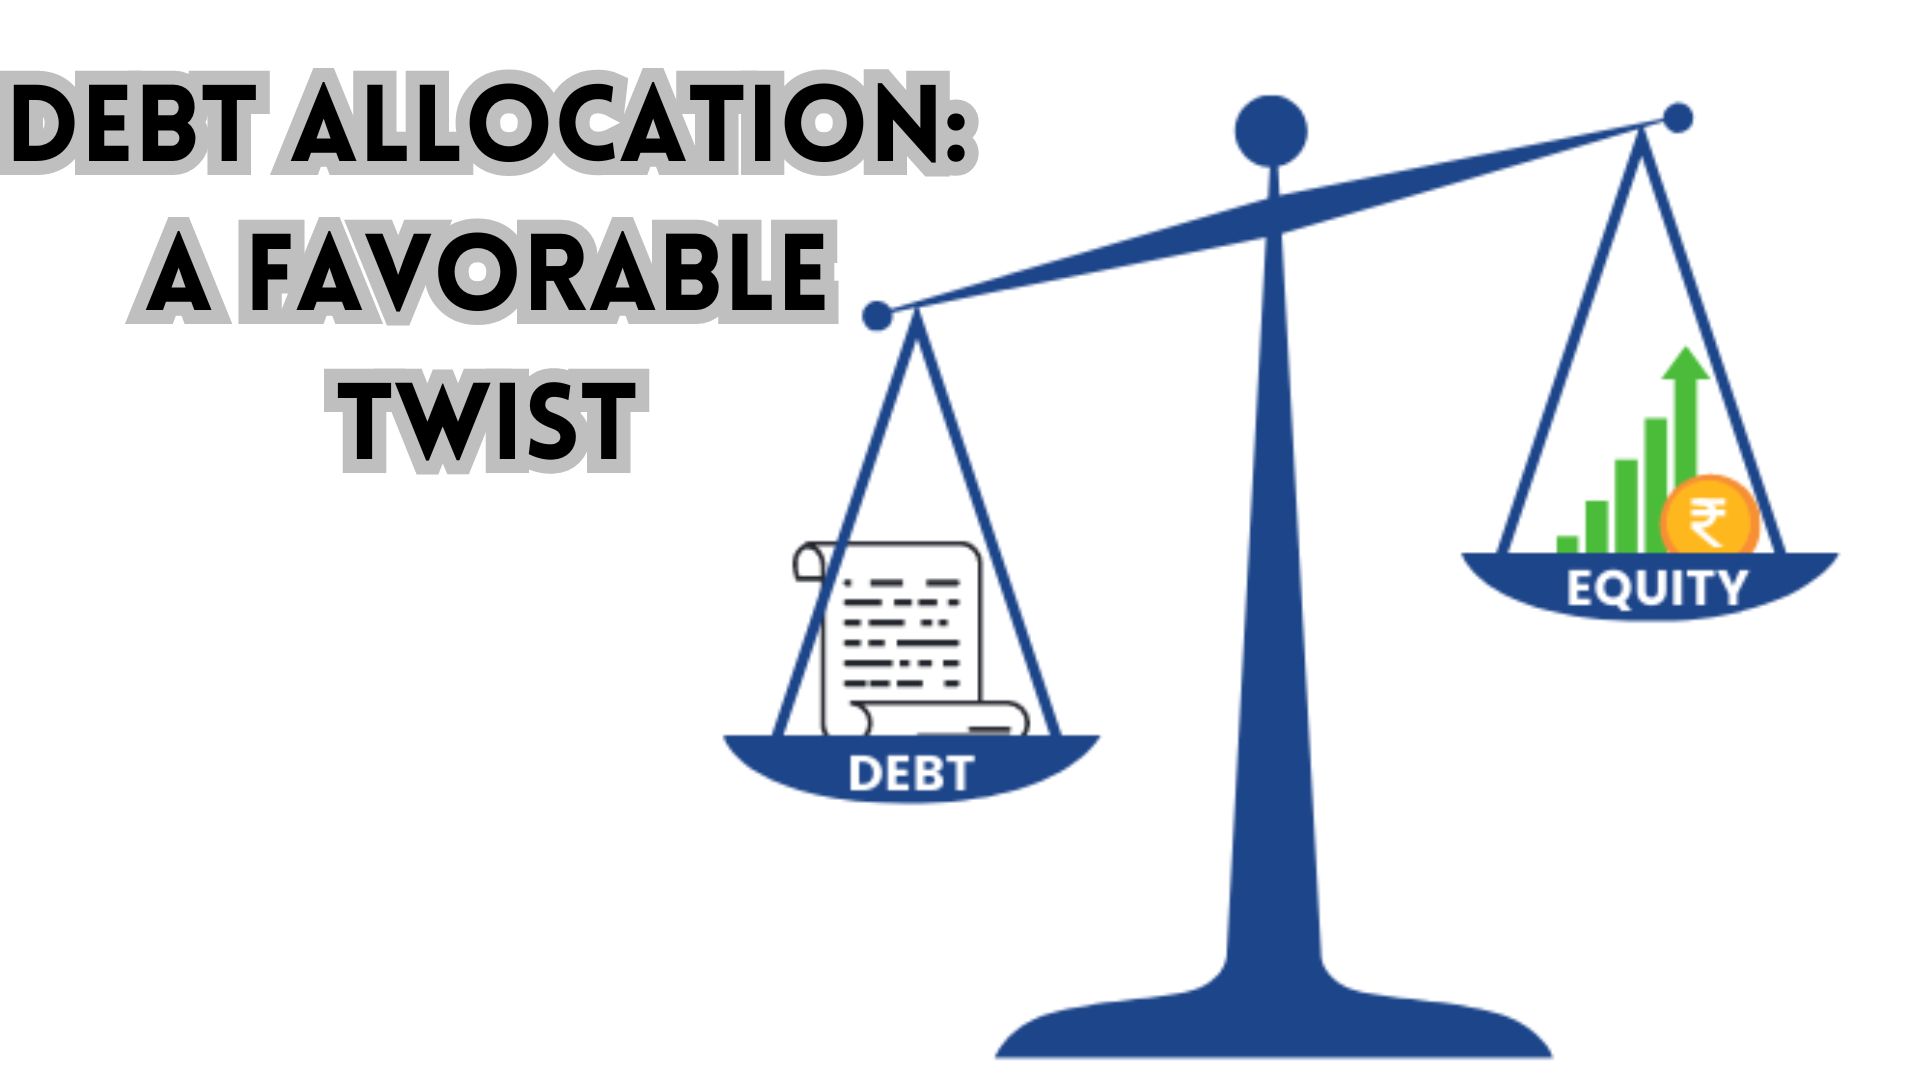 Debt Allocation A Favorable Twist.